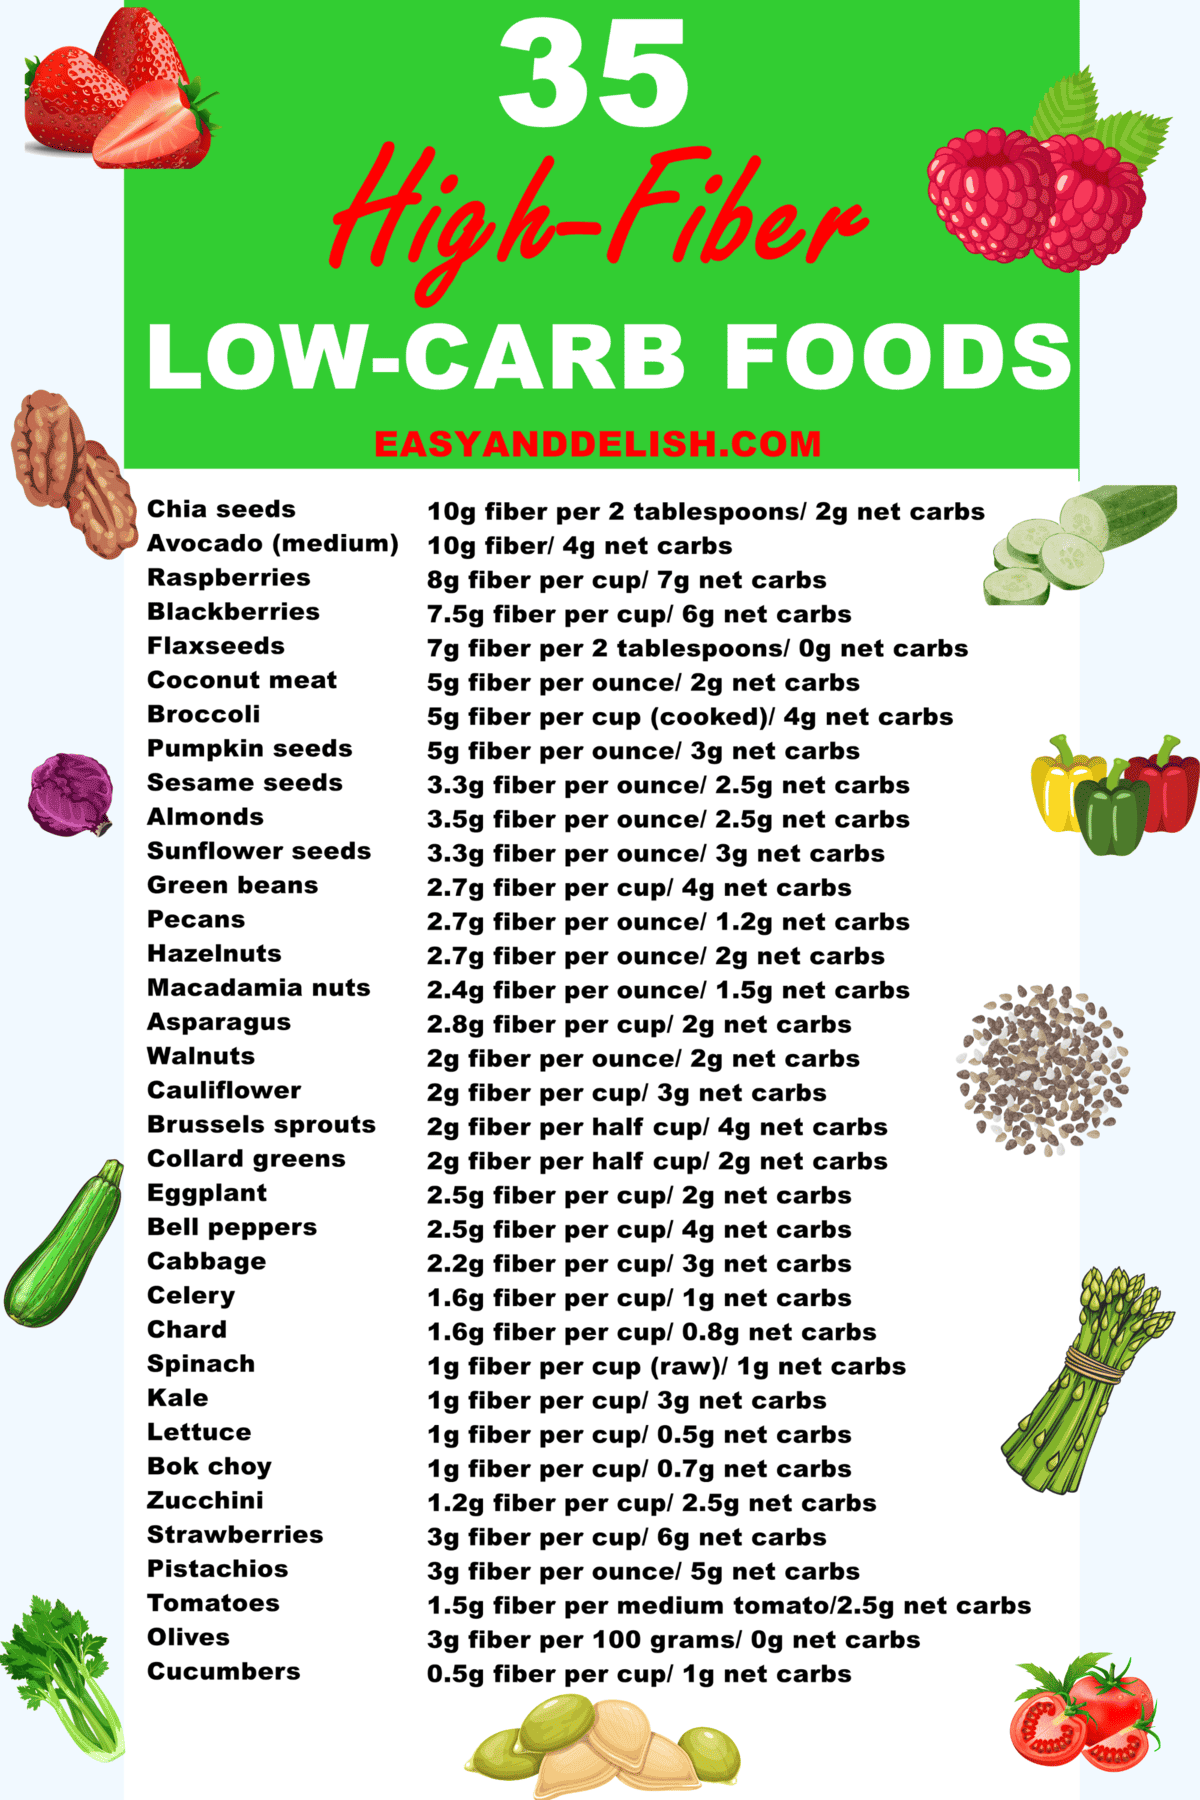 fiber foods chart